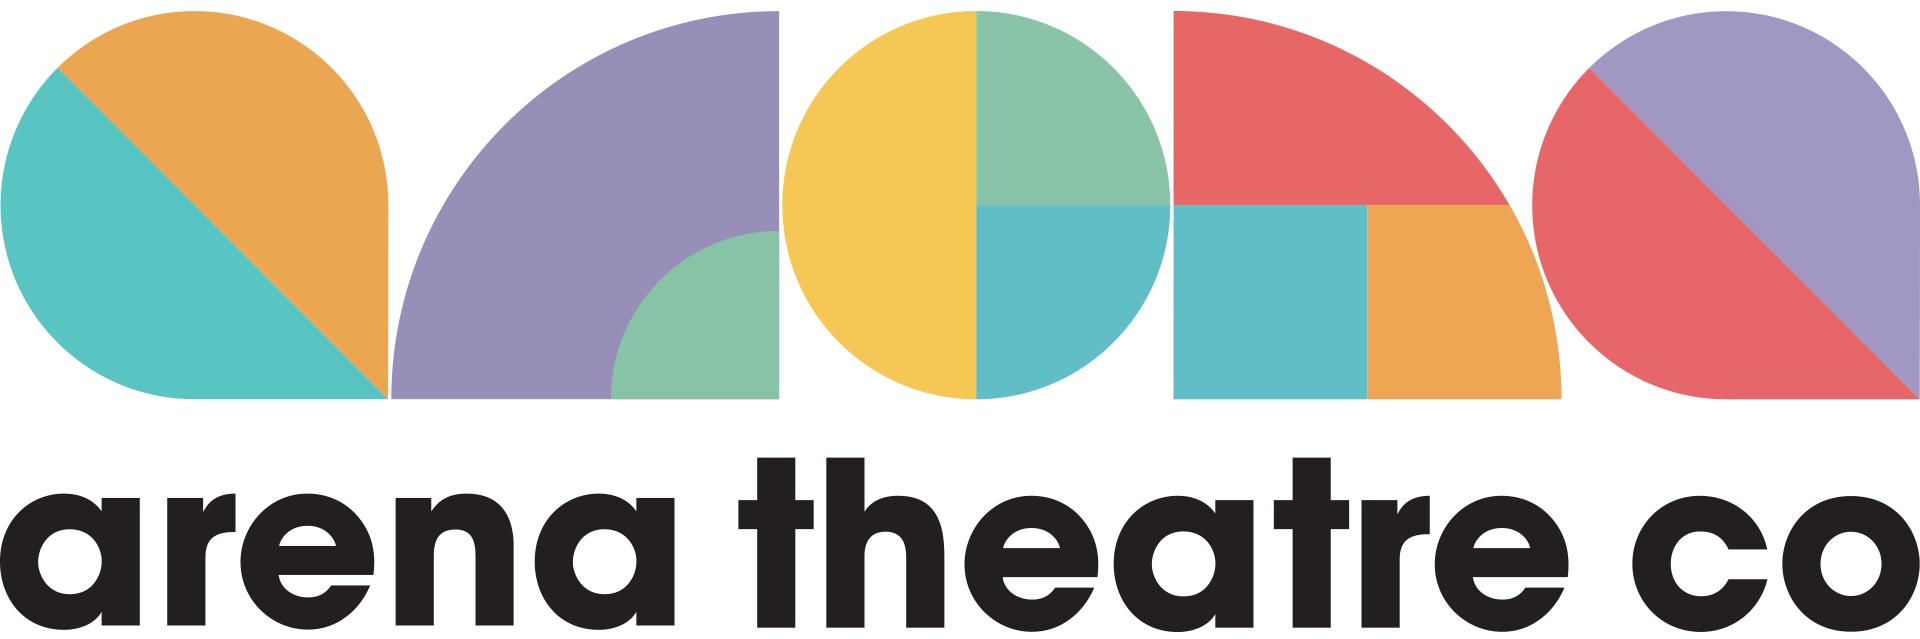 Arena Theatre Co logo